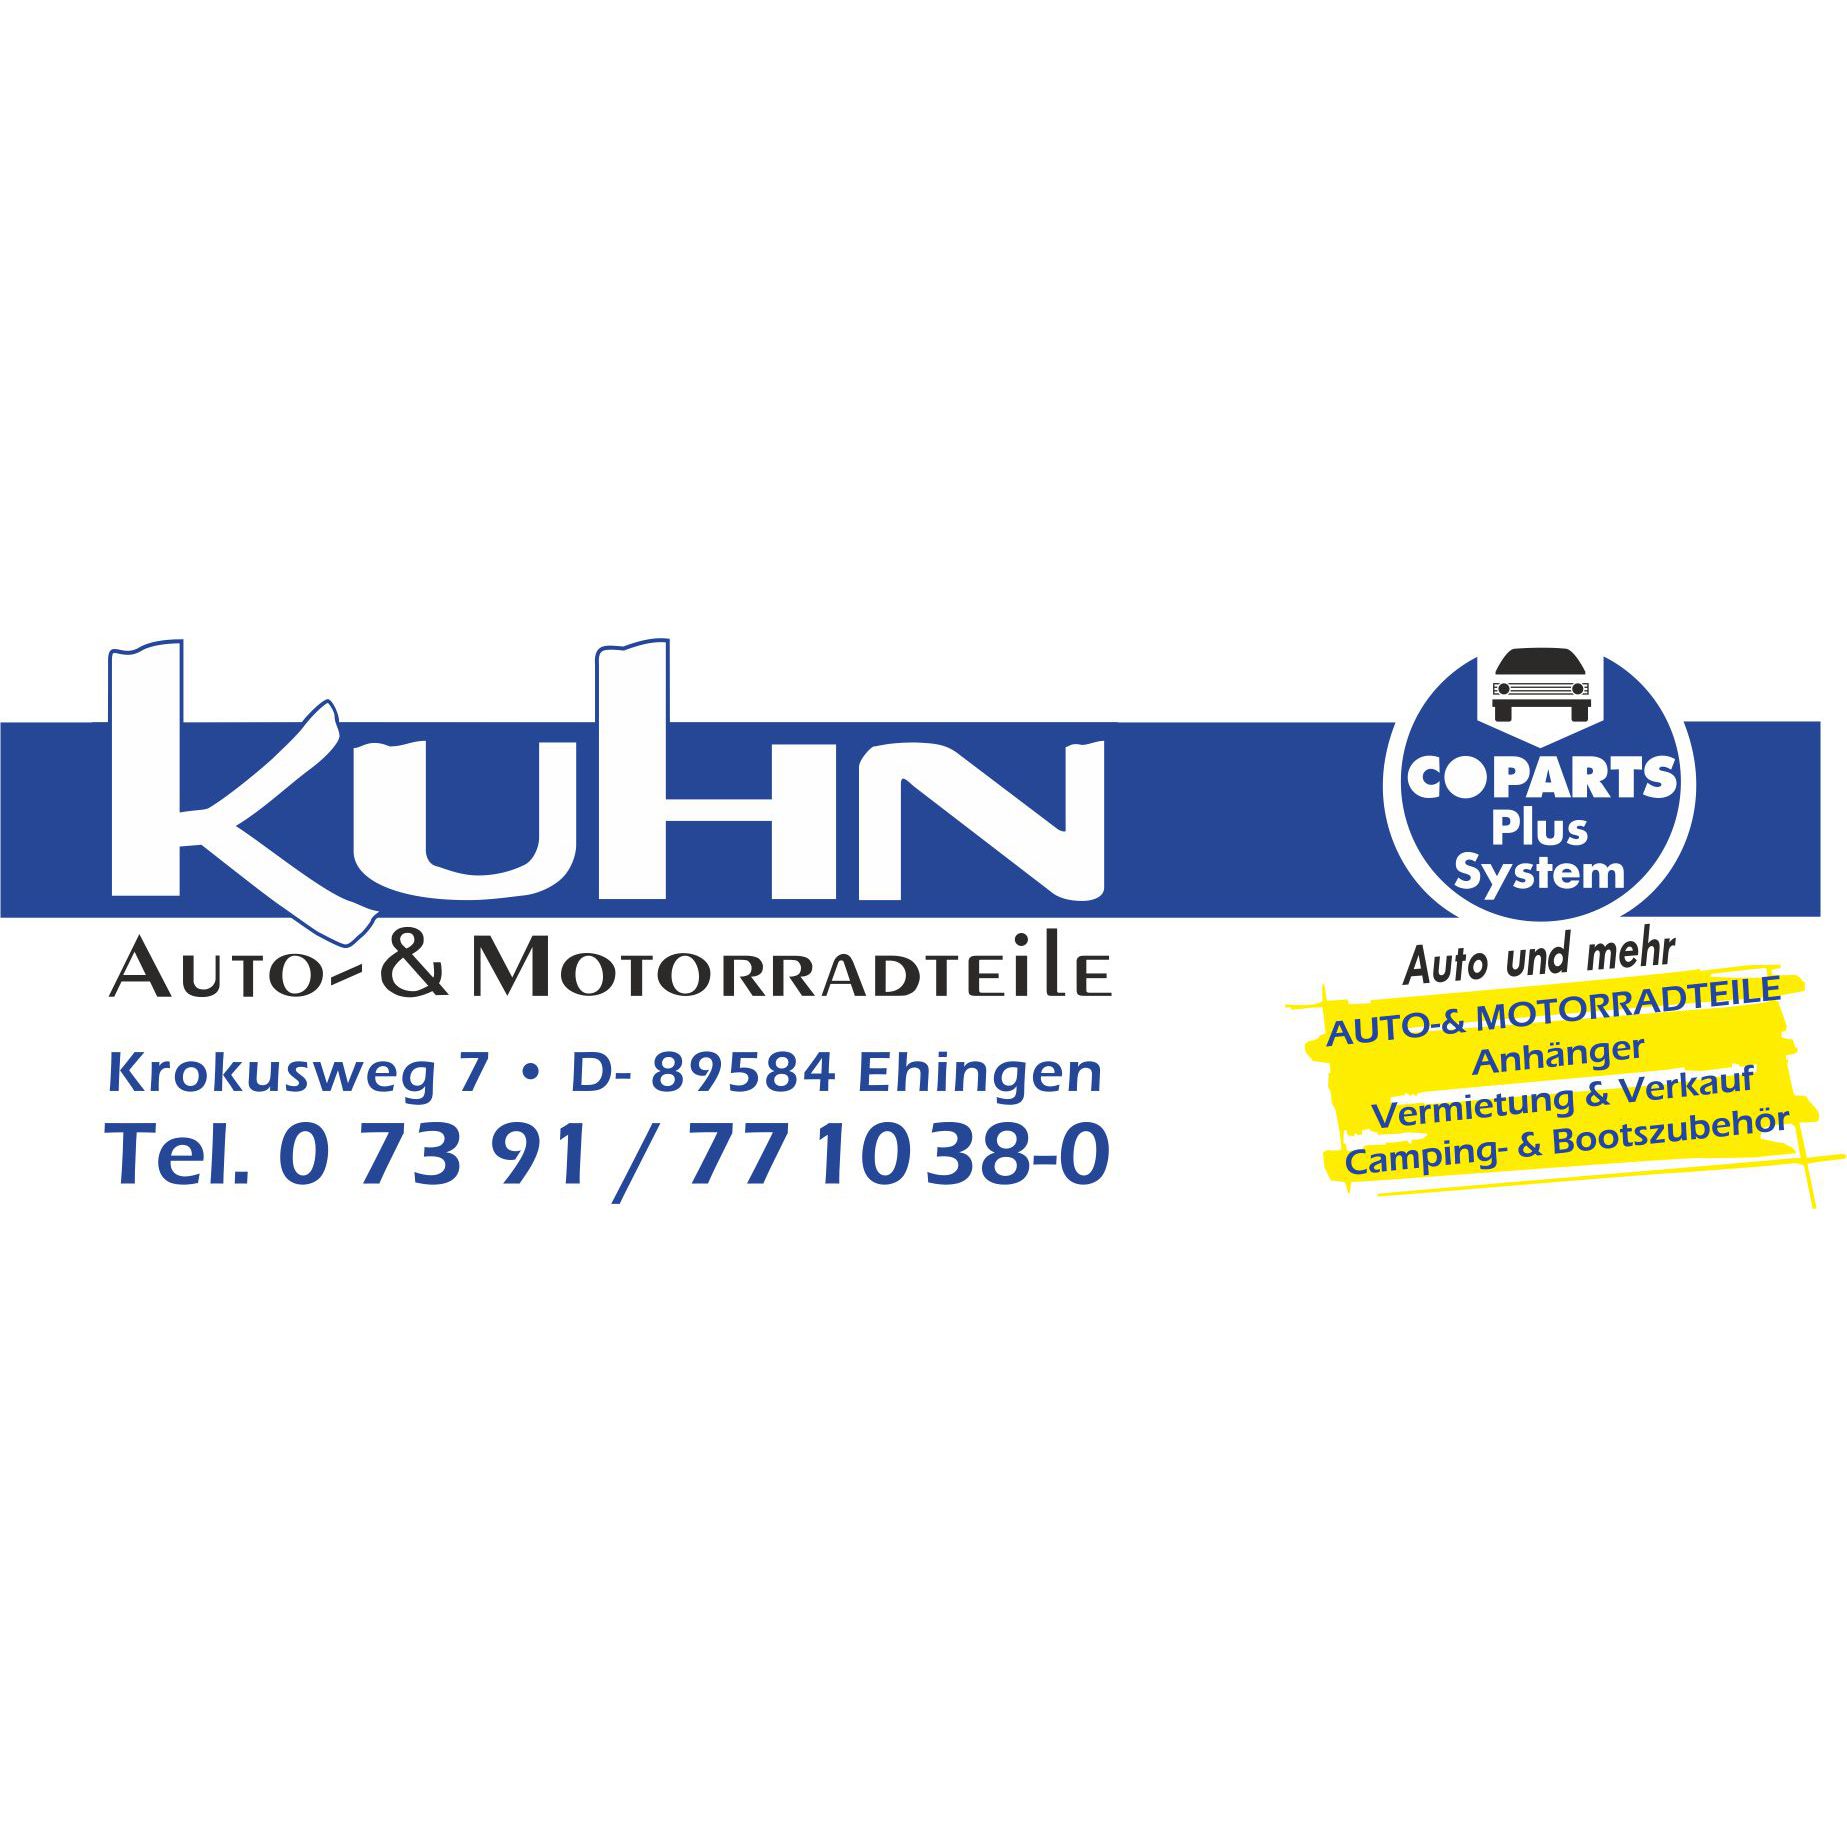 Auto- & Motorradteile Kuhn Logo